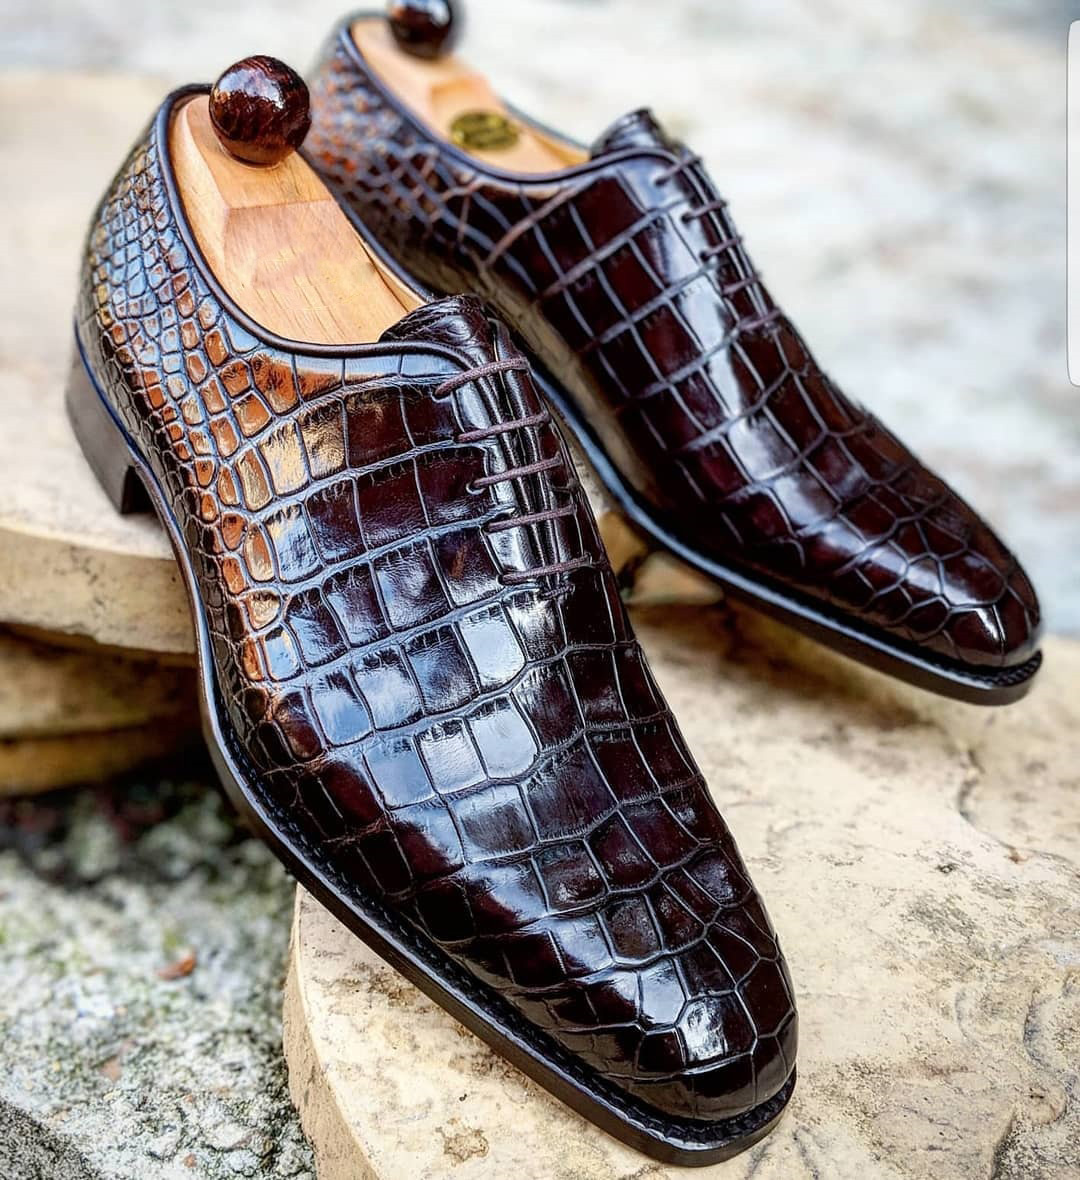 Whole Cut Oxford Shoe in Crocodile leather